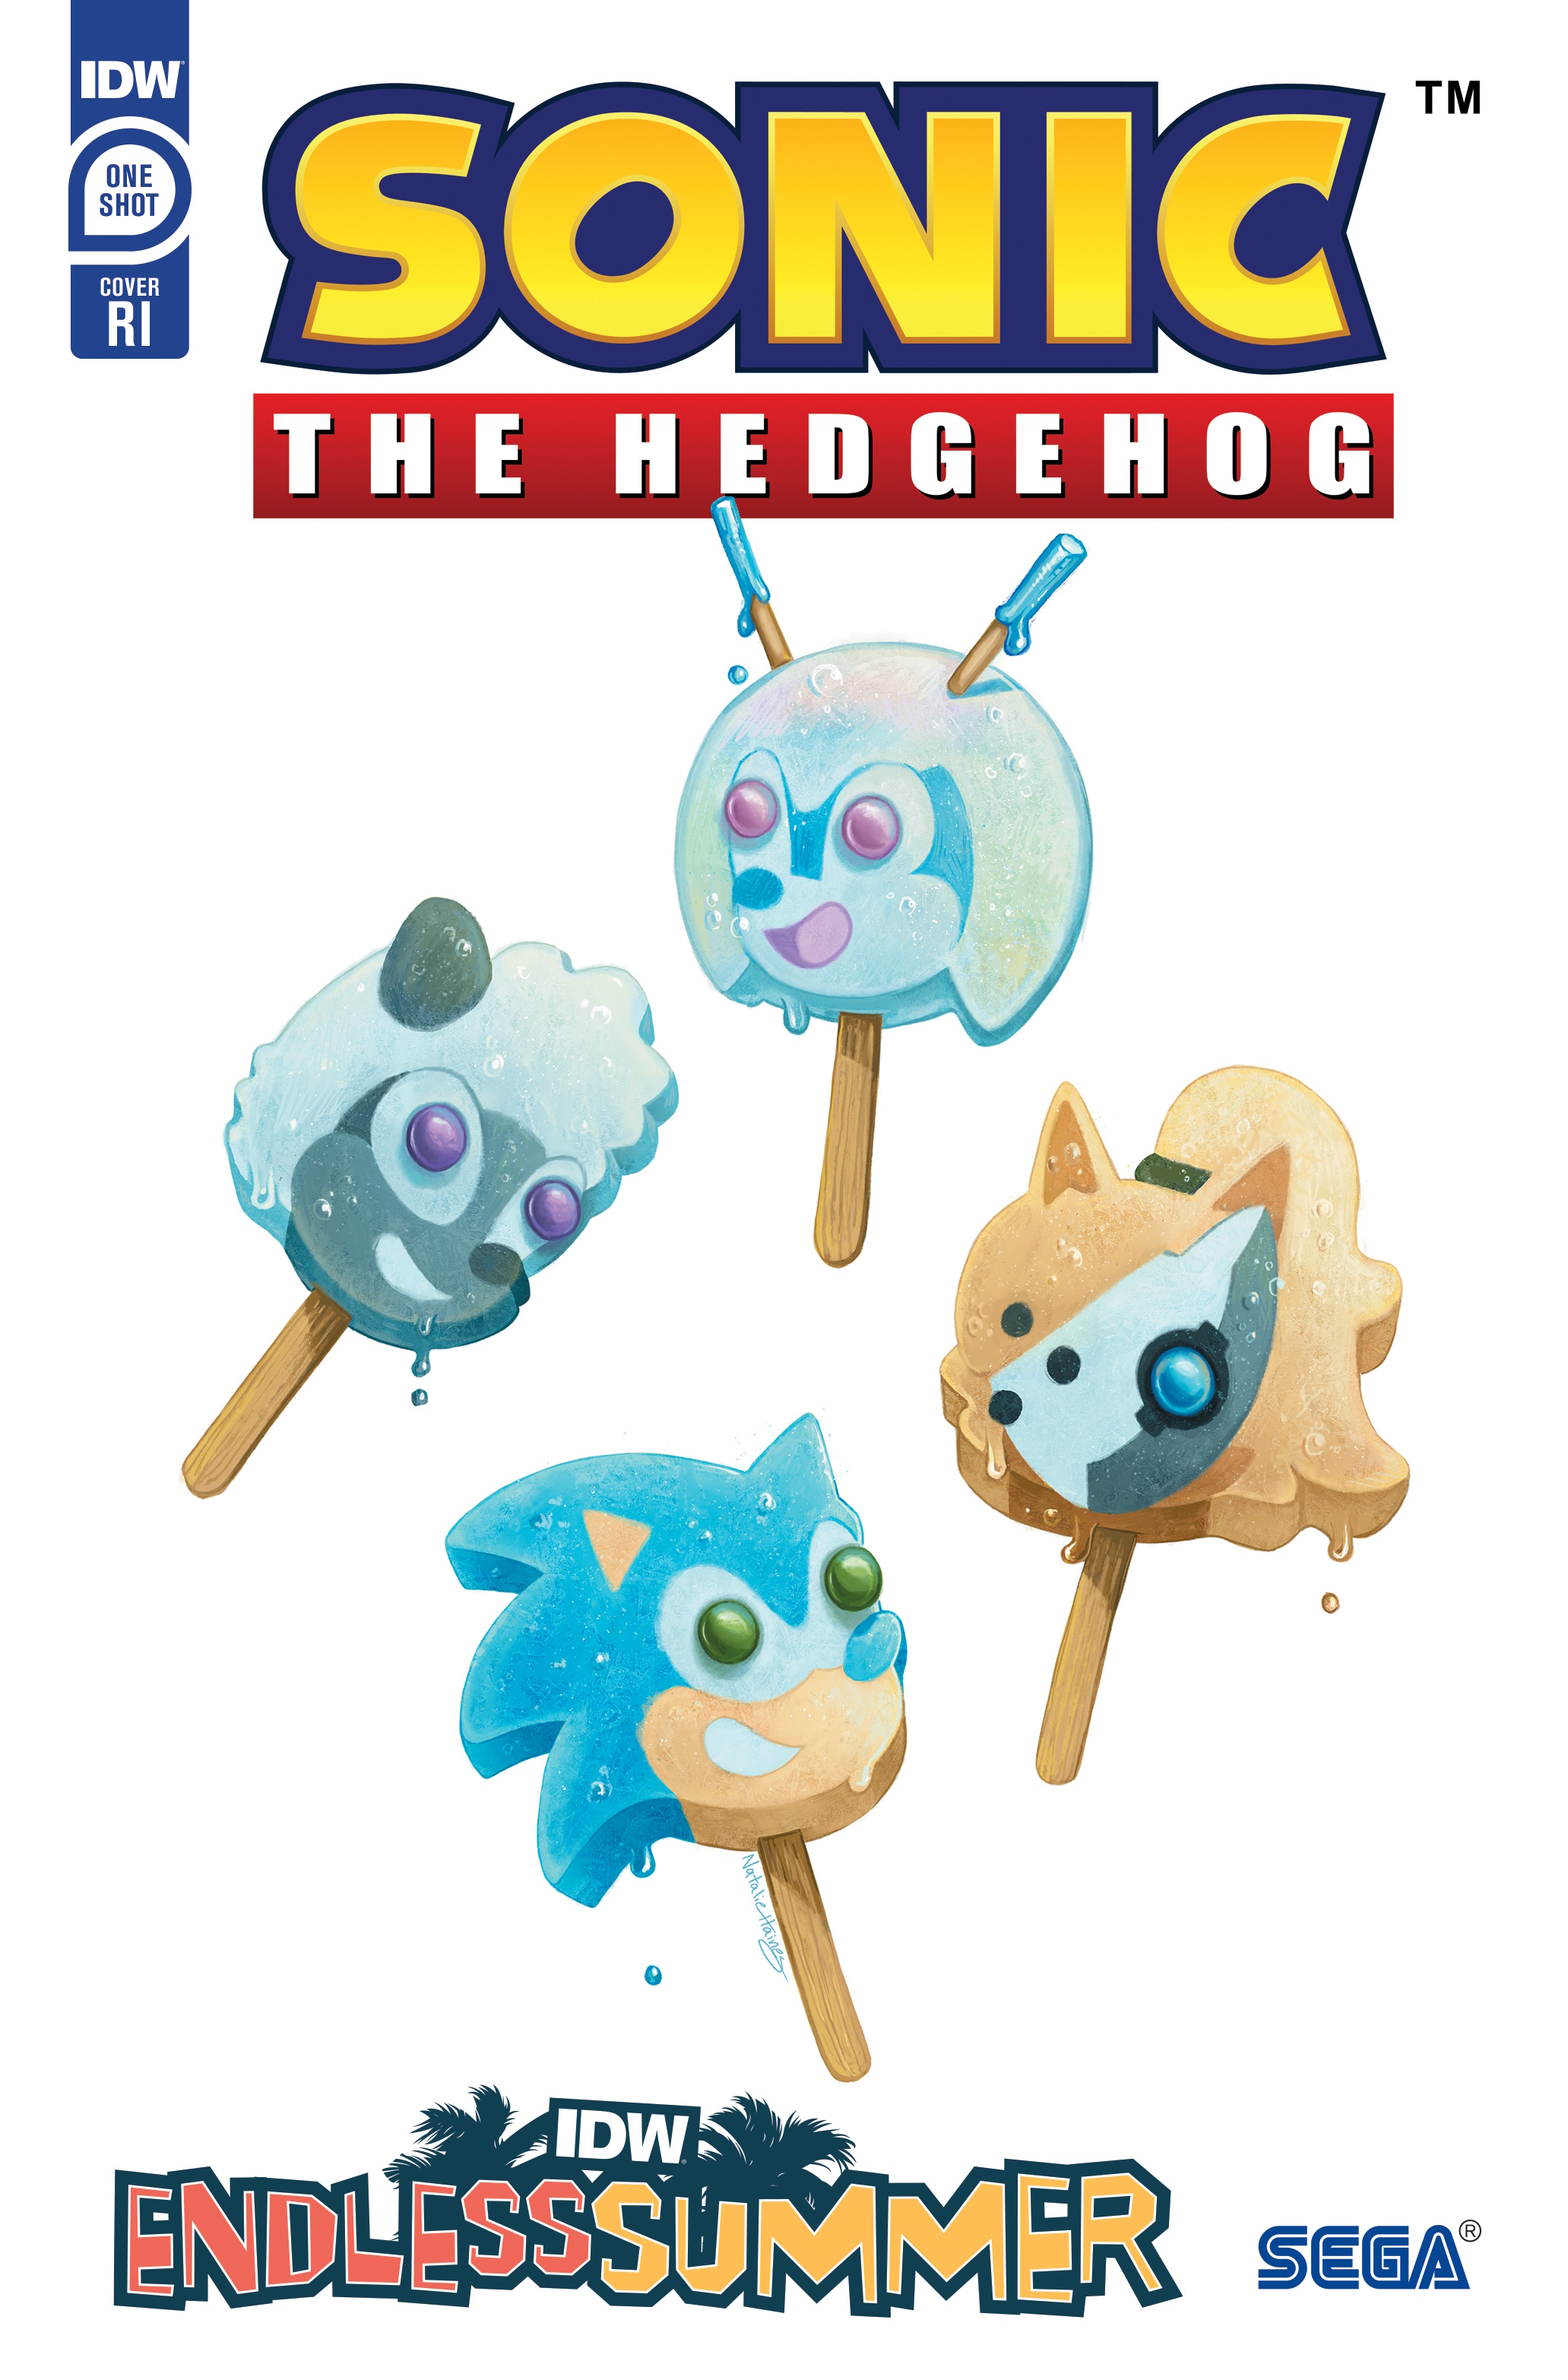 Sonic the Hedgehog (ice cream bar) - Sonic Retro